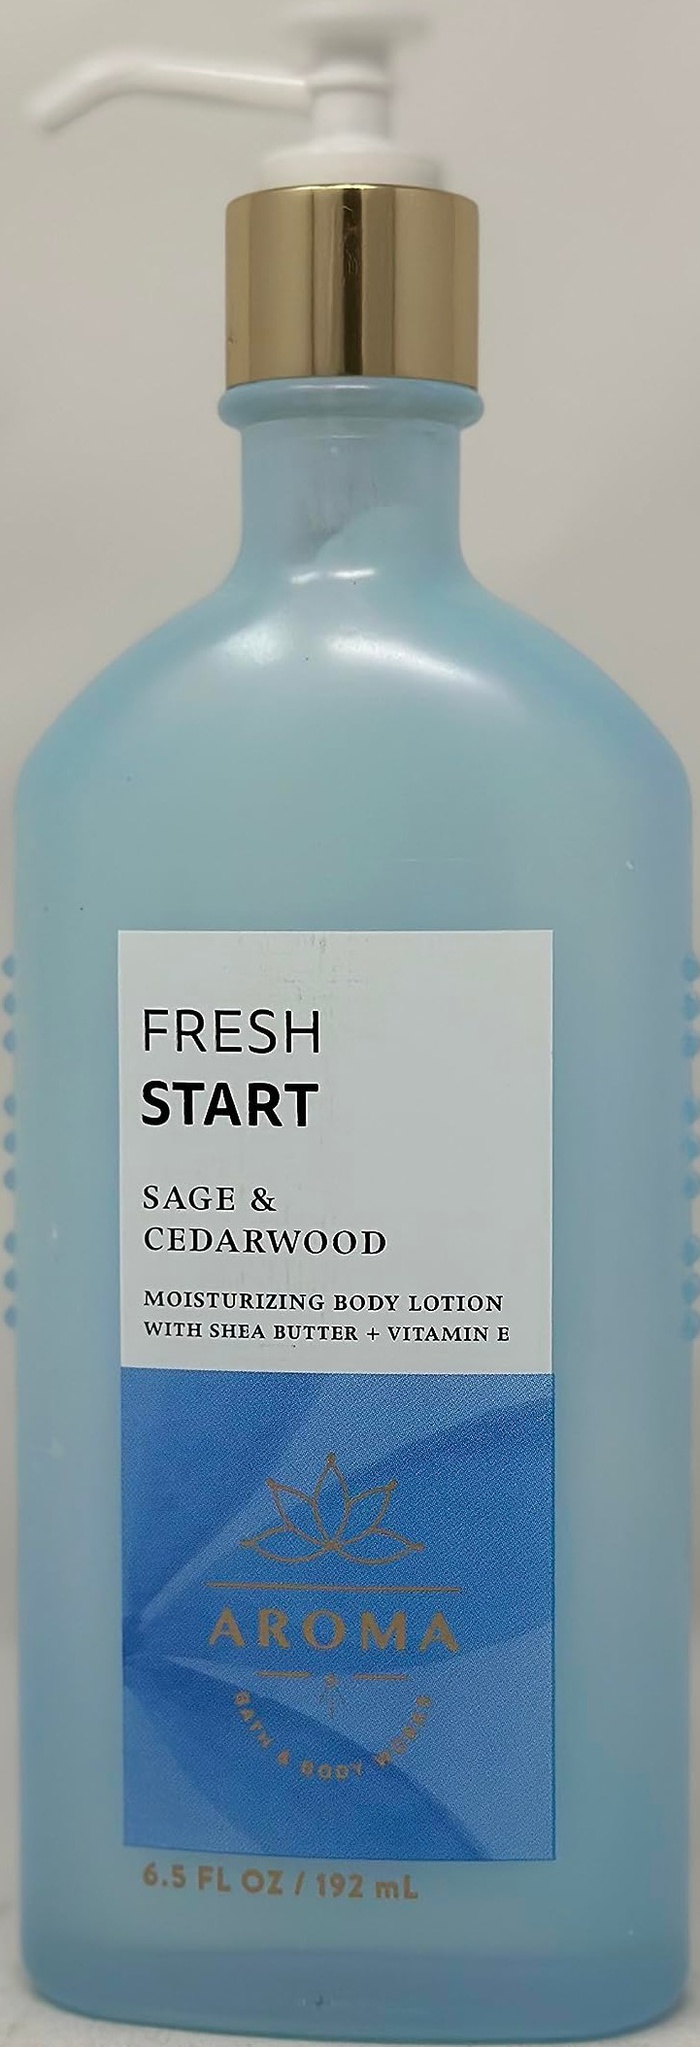 Bath & Body Works Fresh Start Moisturizing Body Lotion